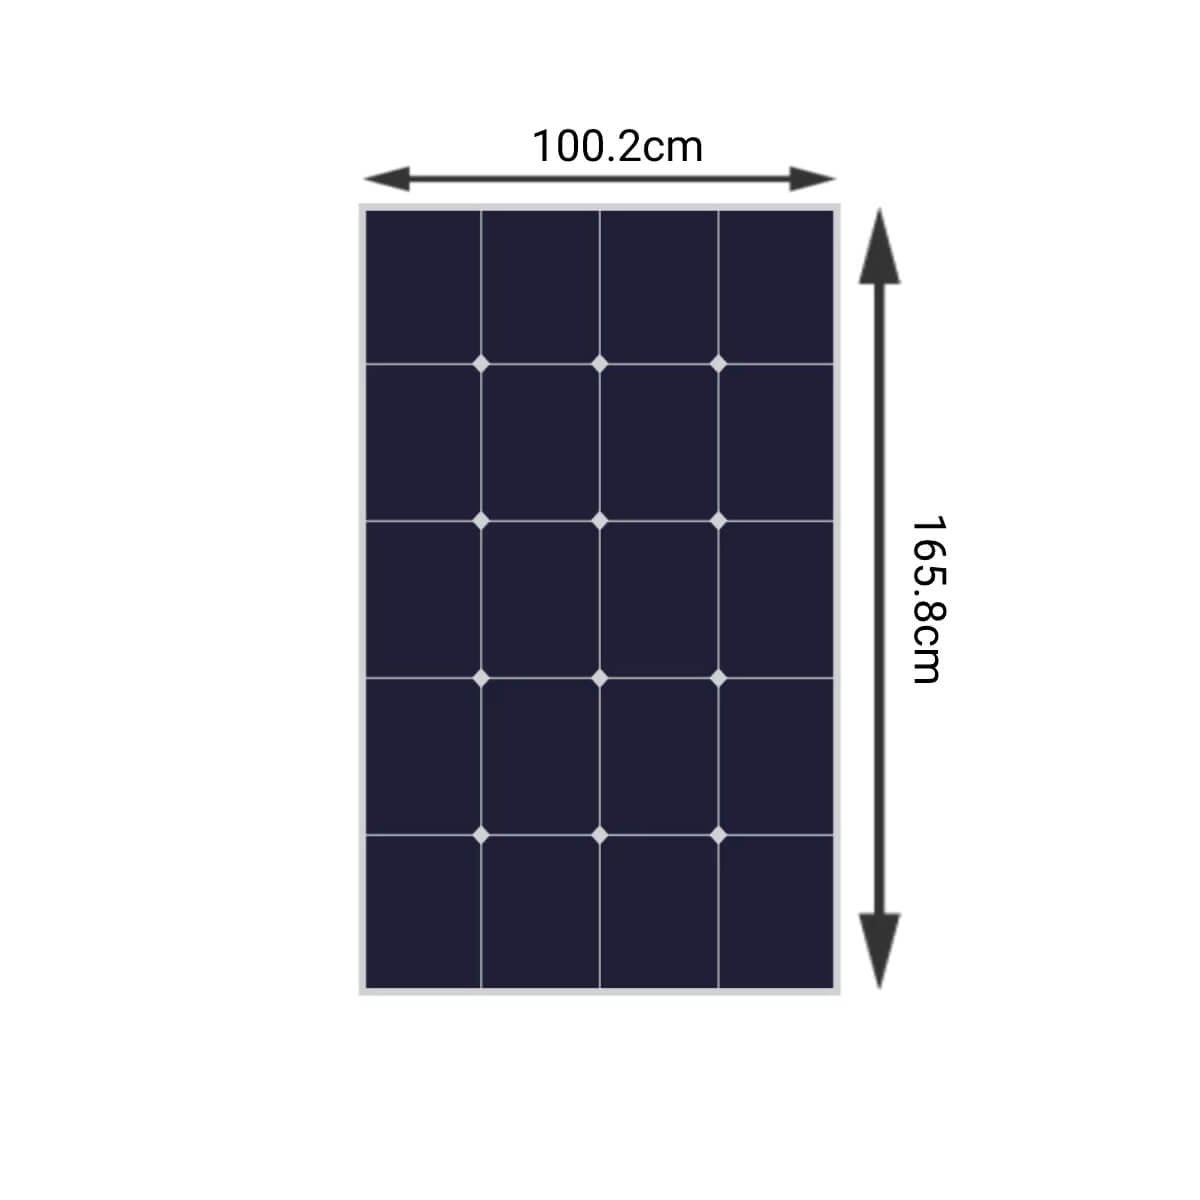 610W Solar Panel kit - 2x 305W dimensions